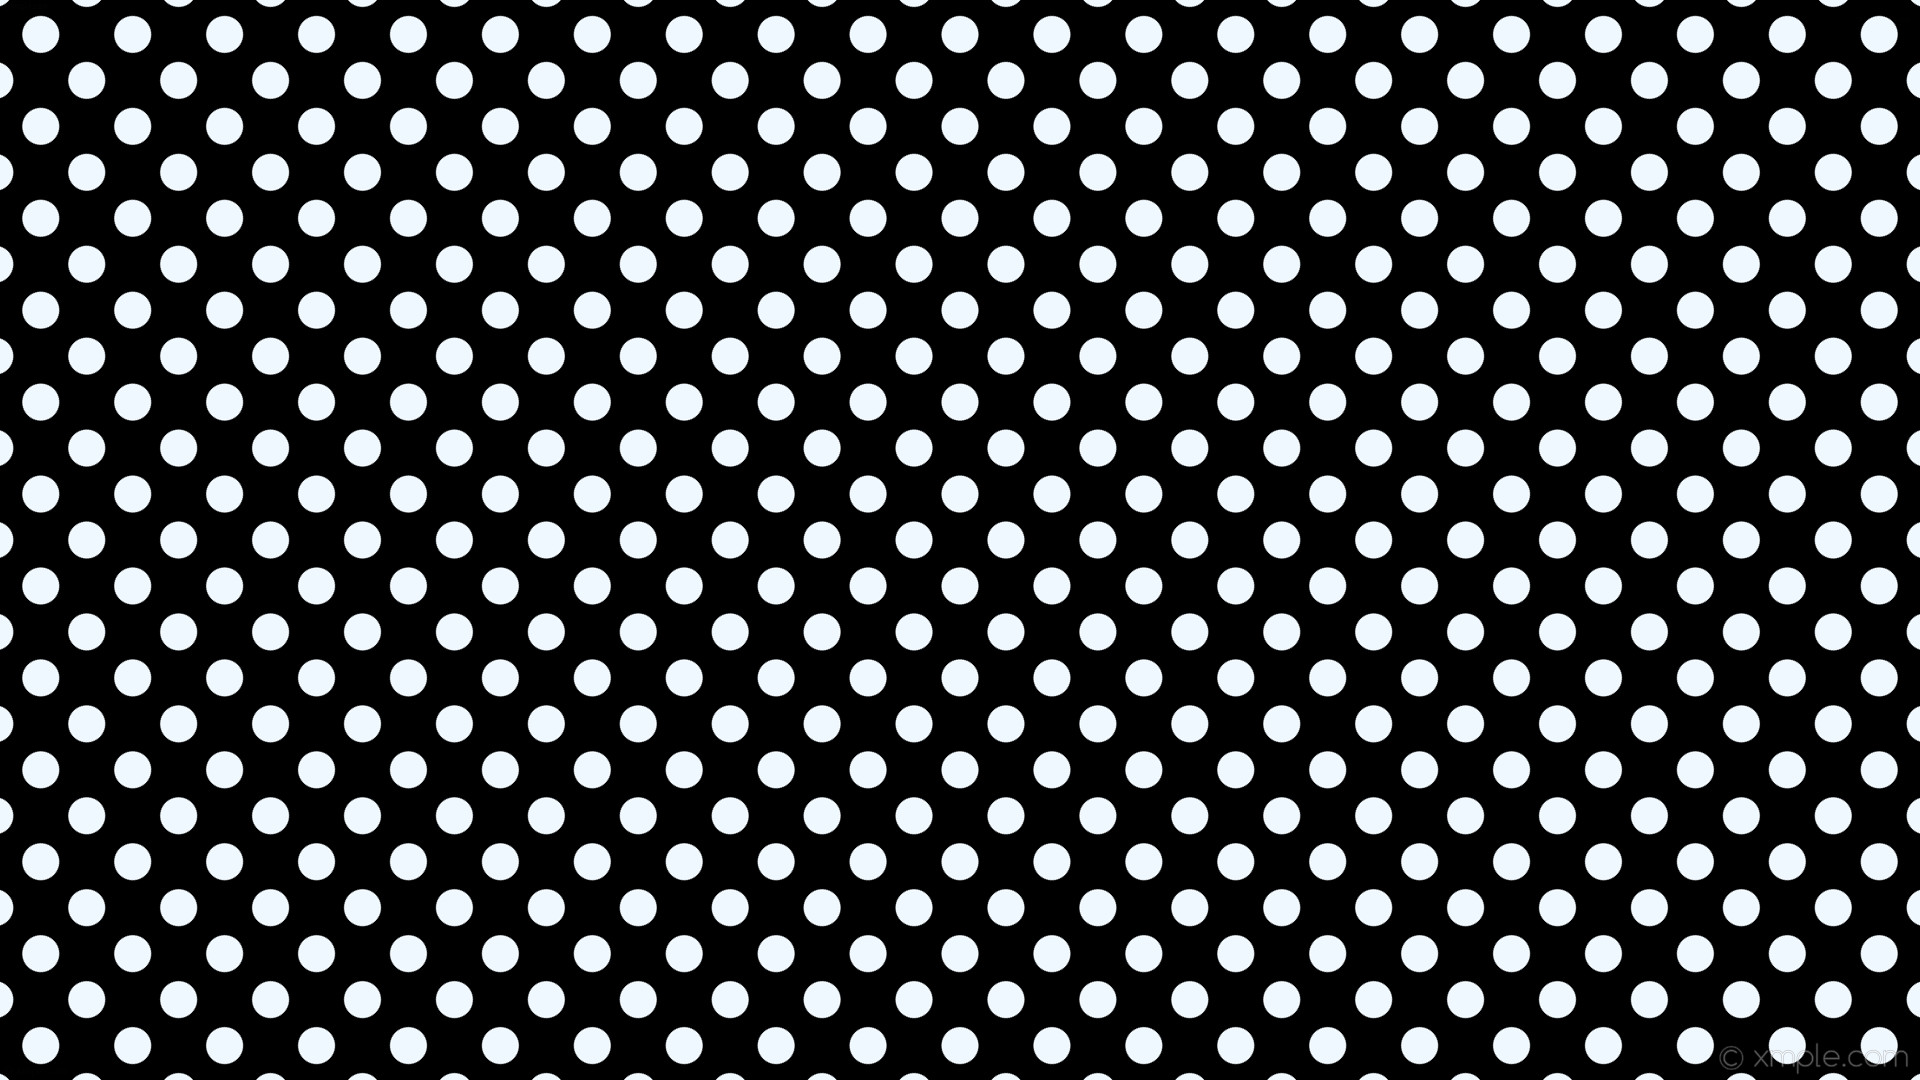 1920x1080 wallpaper dots spots black white polka alice blue #000000 #f0f8ff 225Â° 37px  65px